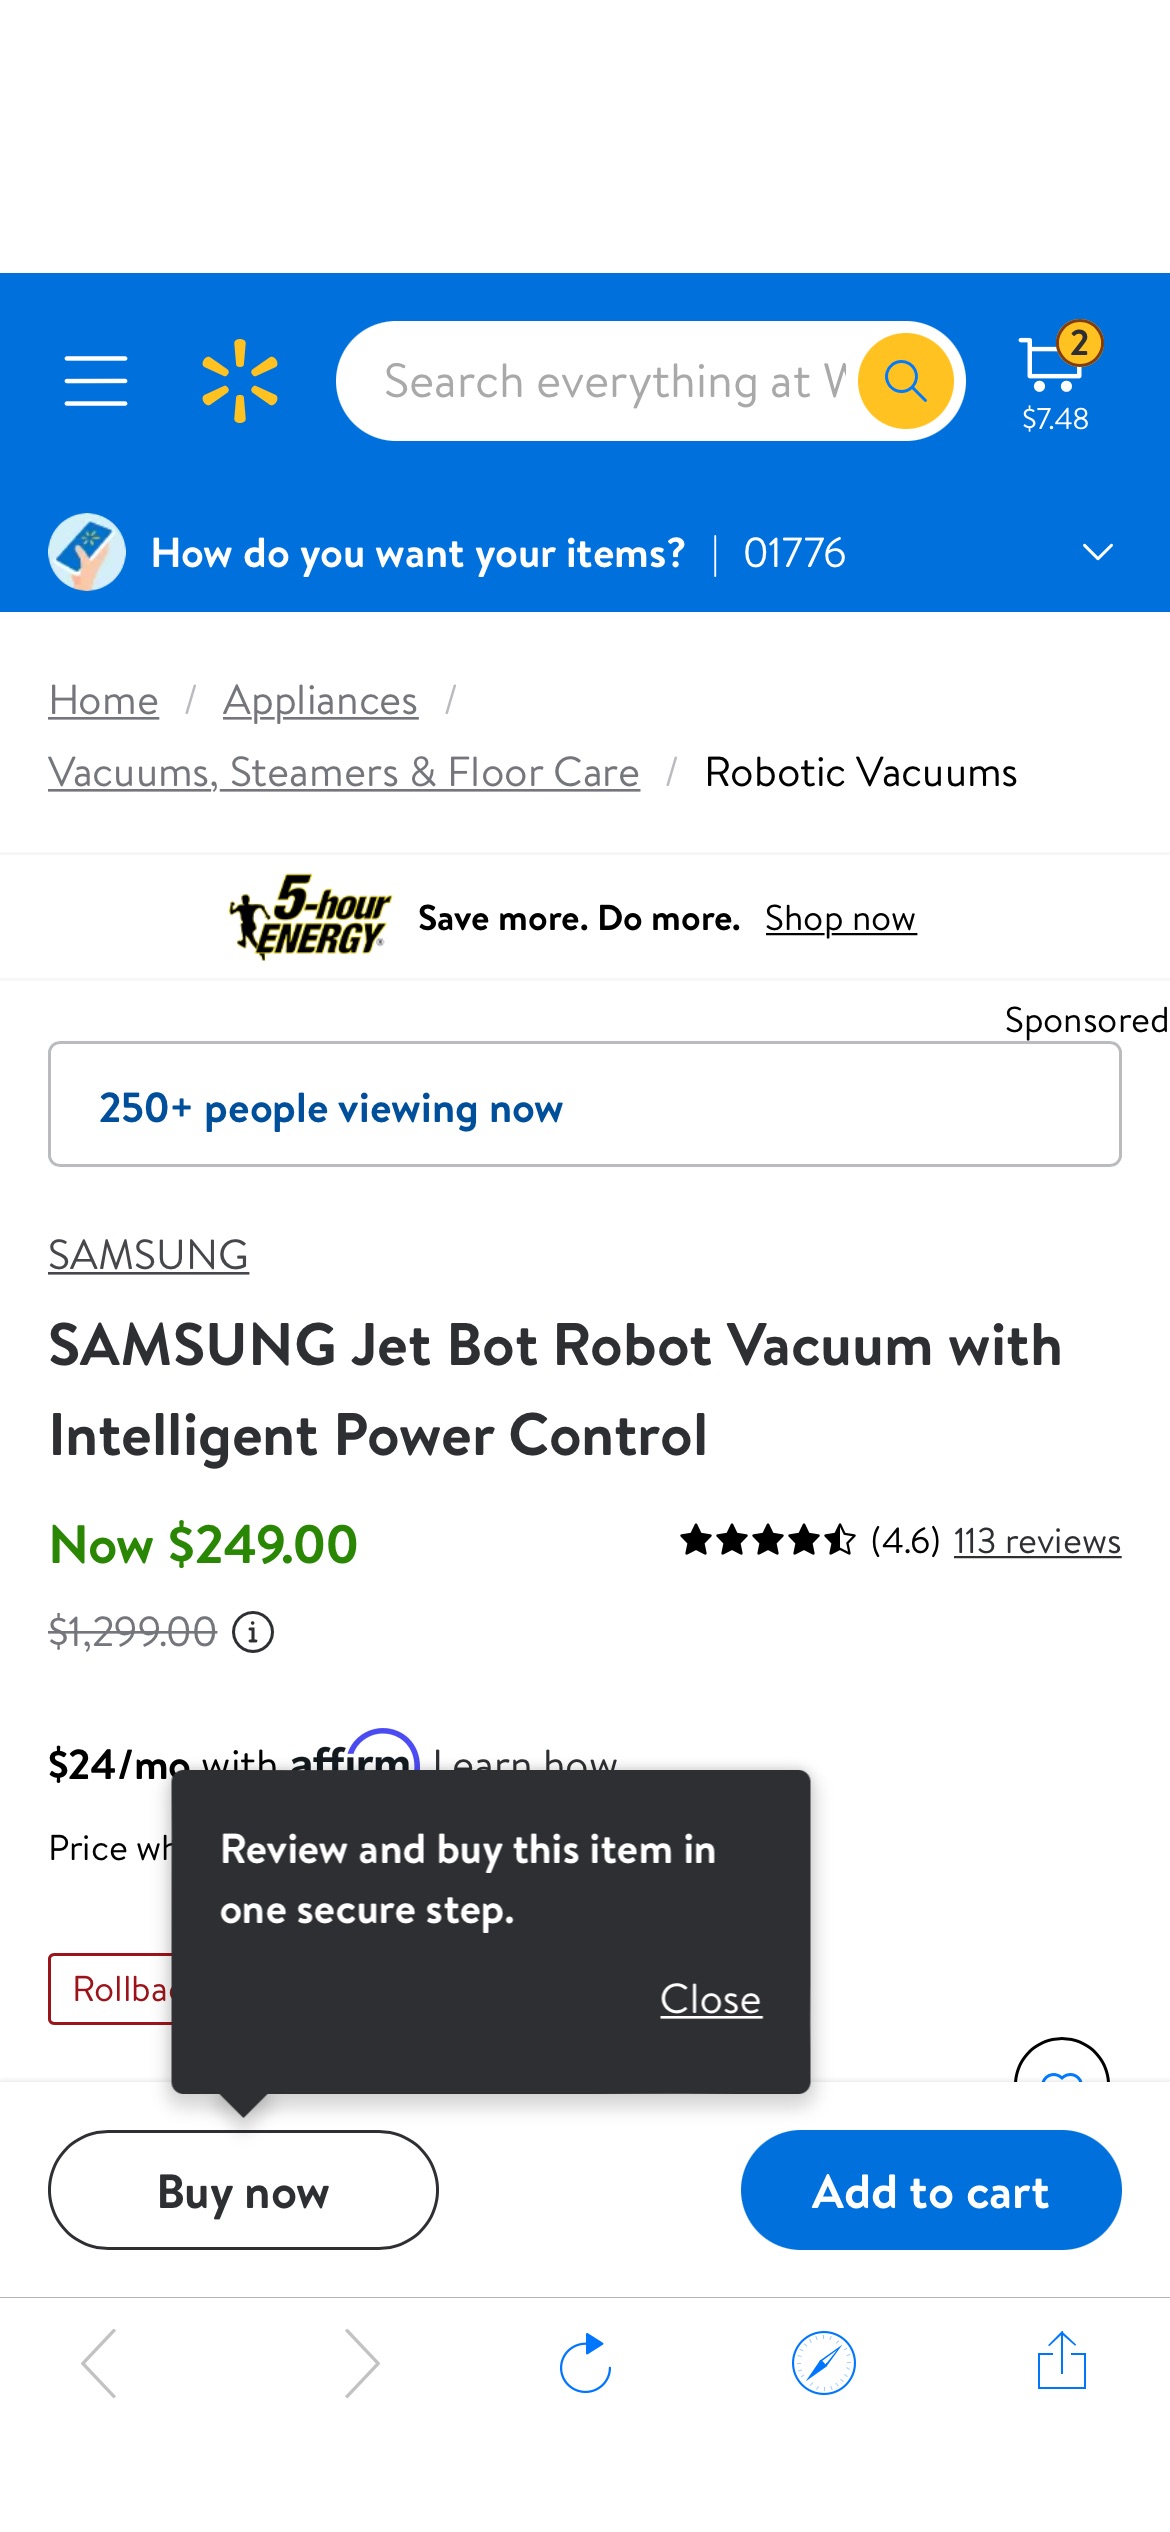 SAMSUNG Jet Bot Robot Vacuum with Intelligent Power Control - Walmart.com